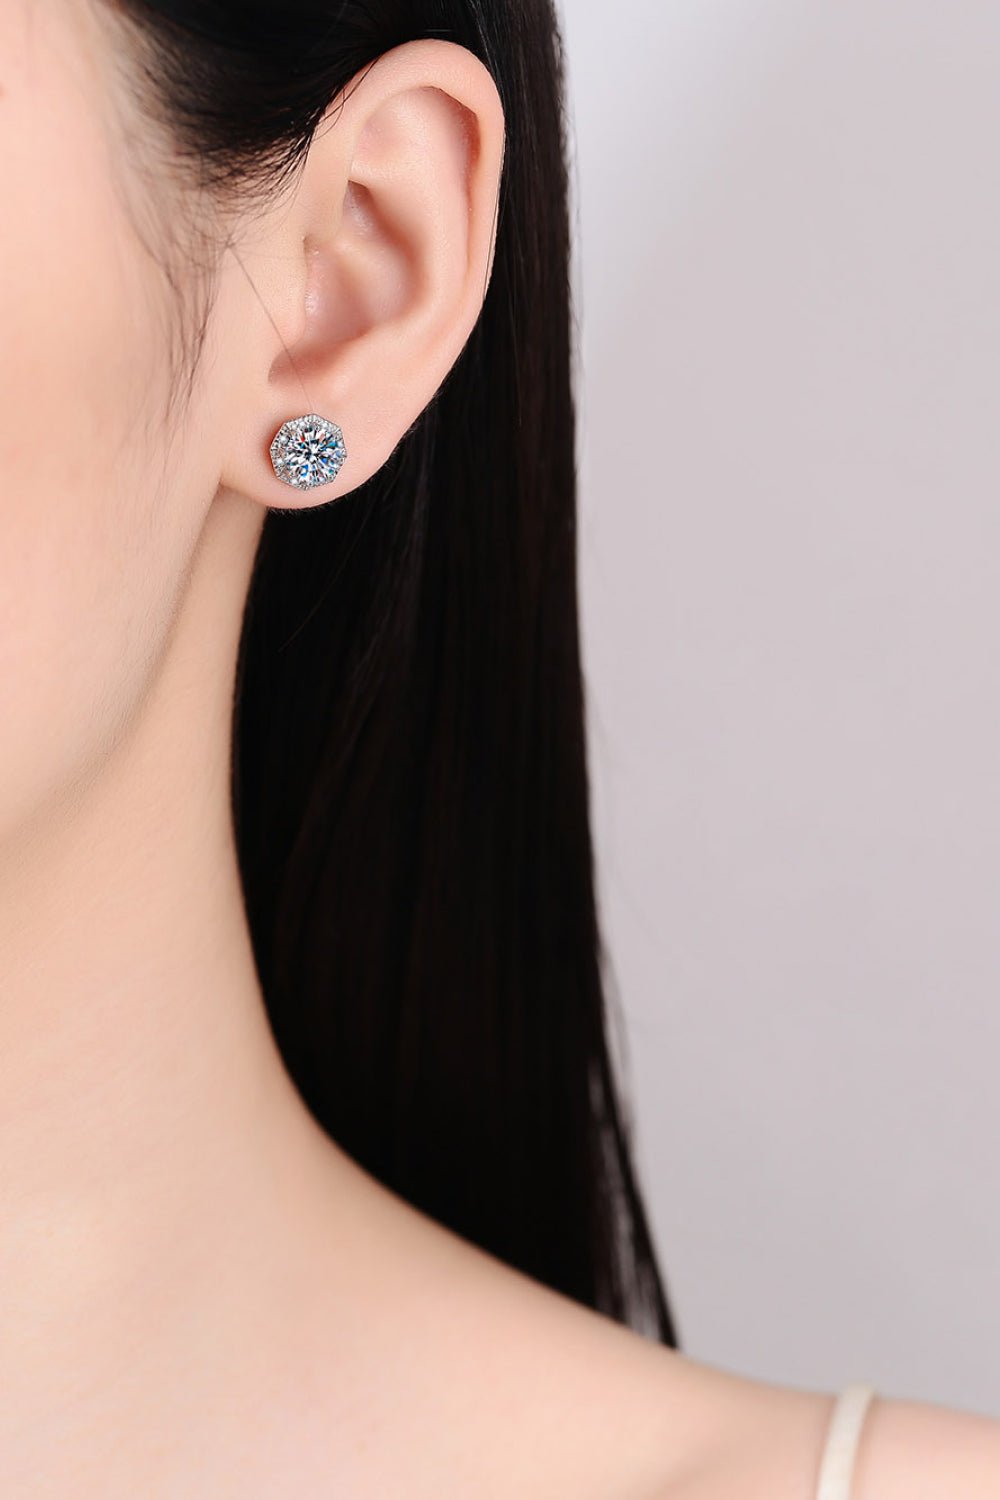 2 Carat Moissanite 925 Sterling Silver Stud Earrings - EMMY